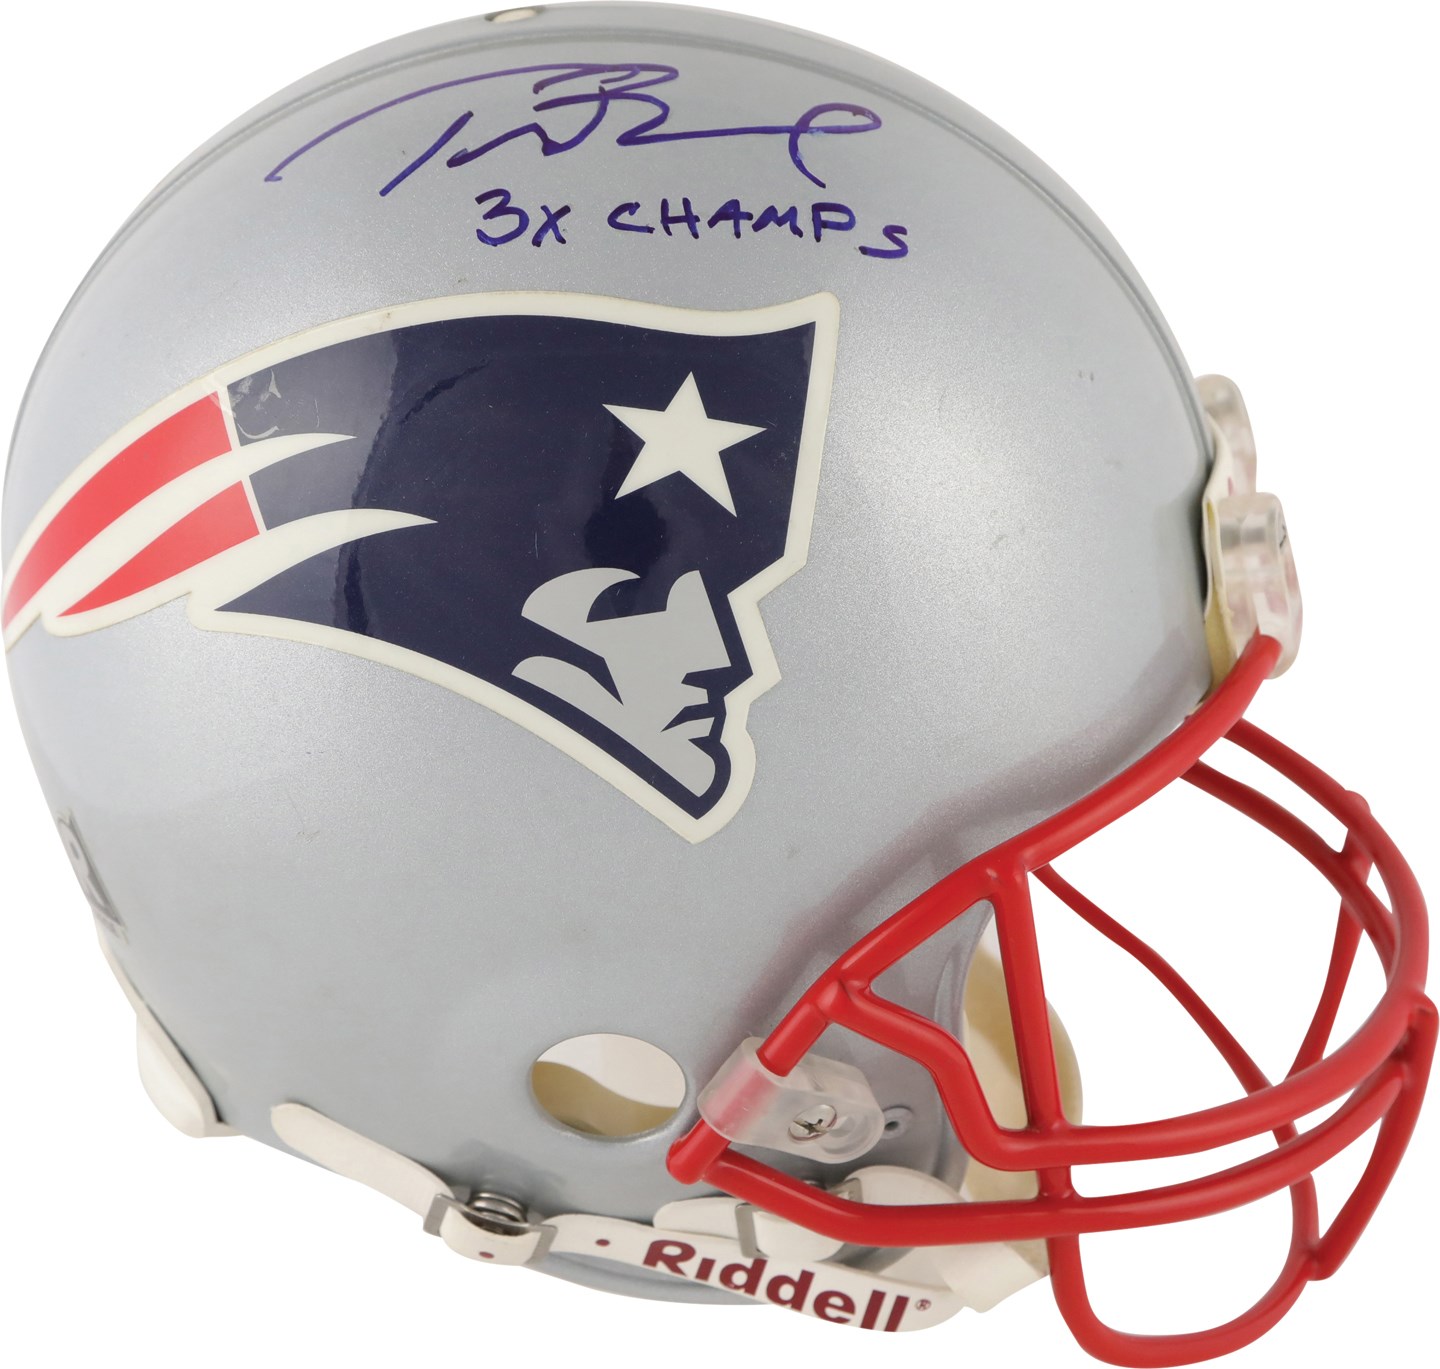 - 2005 Tom Brady "3x Champs" New England Patriots Signed Full Size Helmet (Tristar)